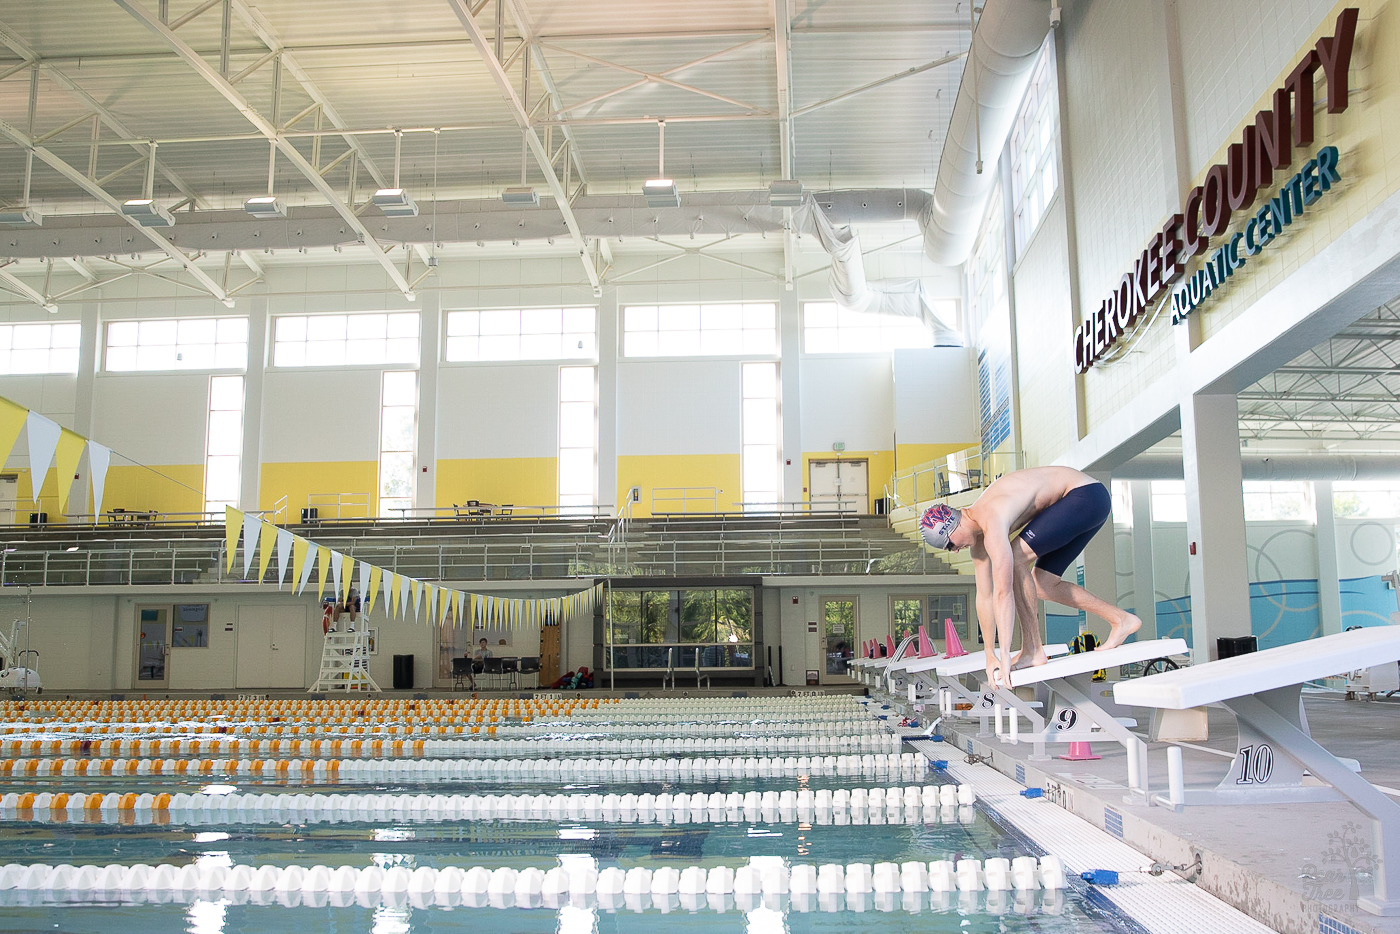 Woodstock high school senior boy swimmer preparing to jump off the Cherokee County Aquatic Center diving block into the indoor pool